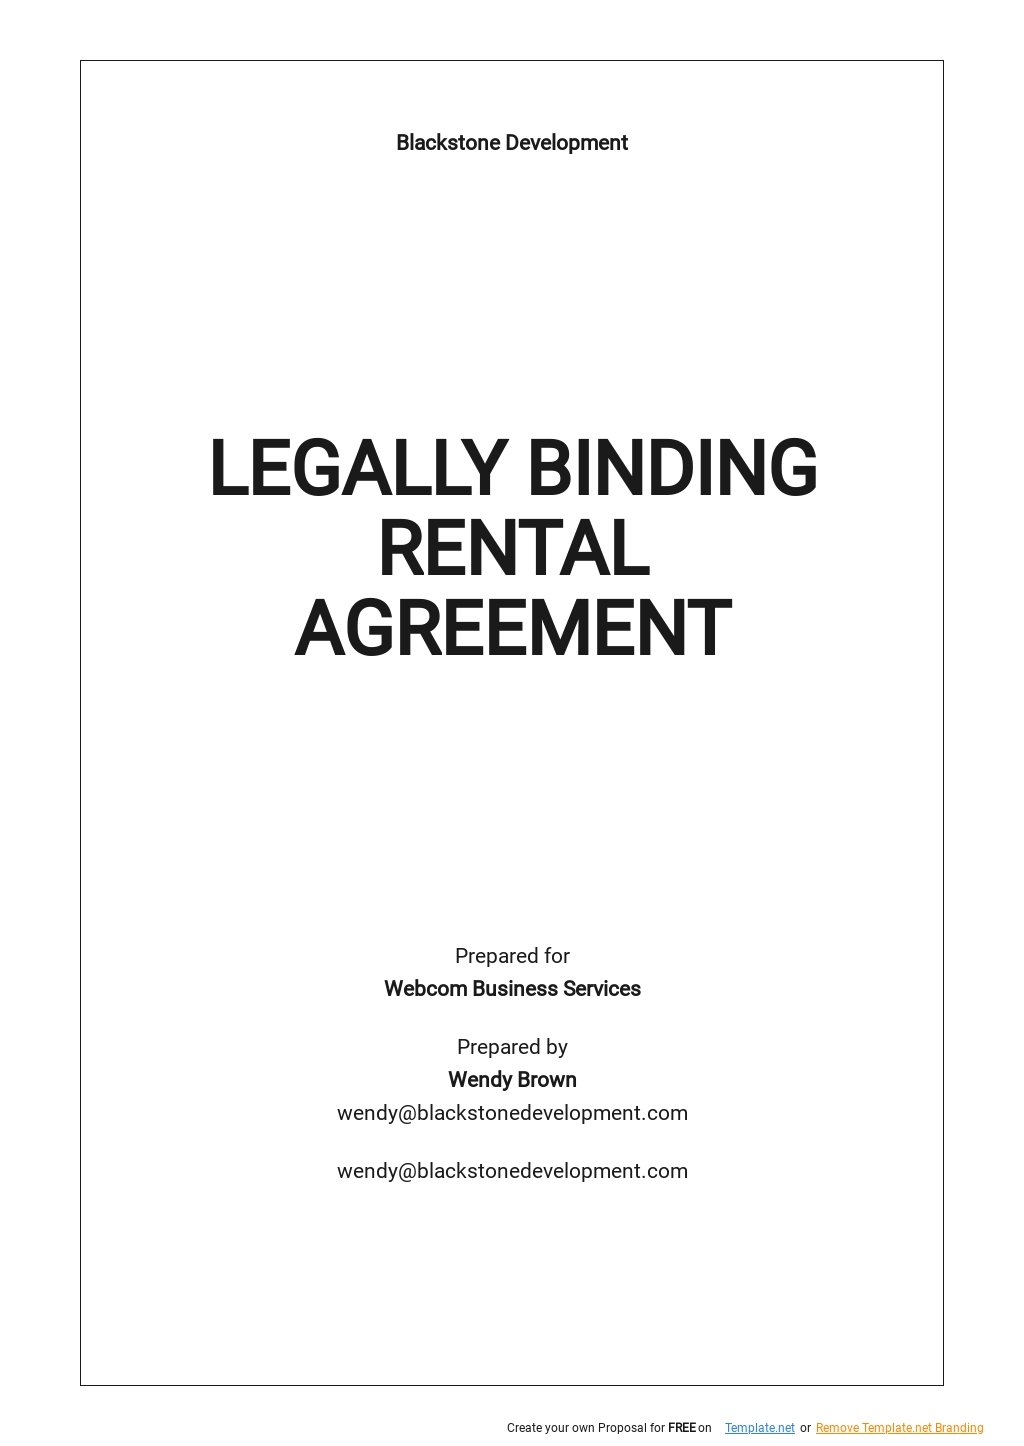 Free Binding Financial Agreement Template